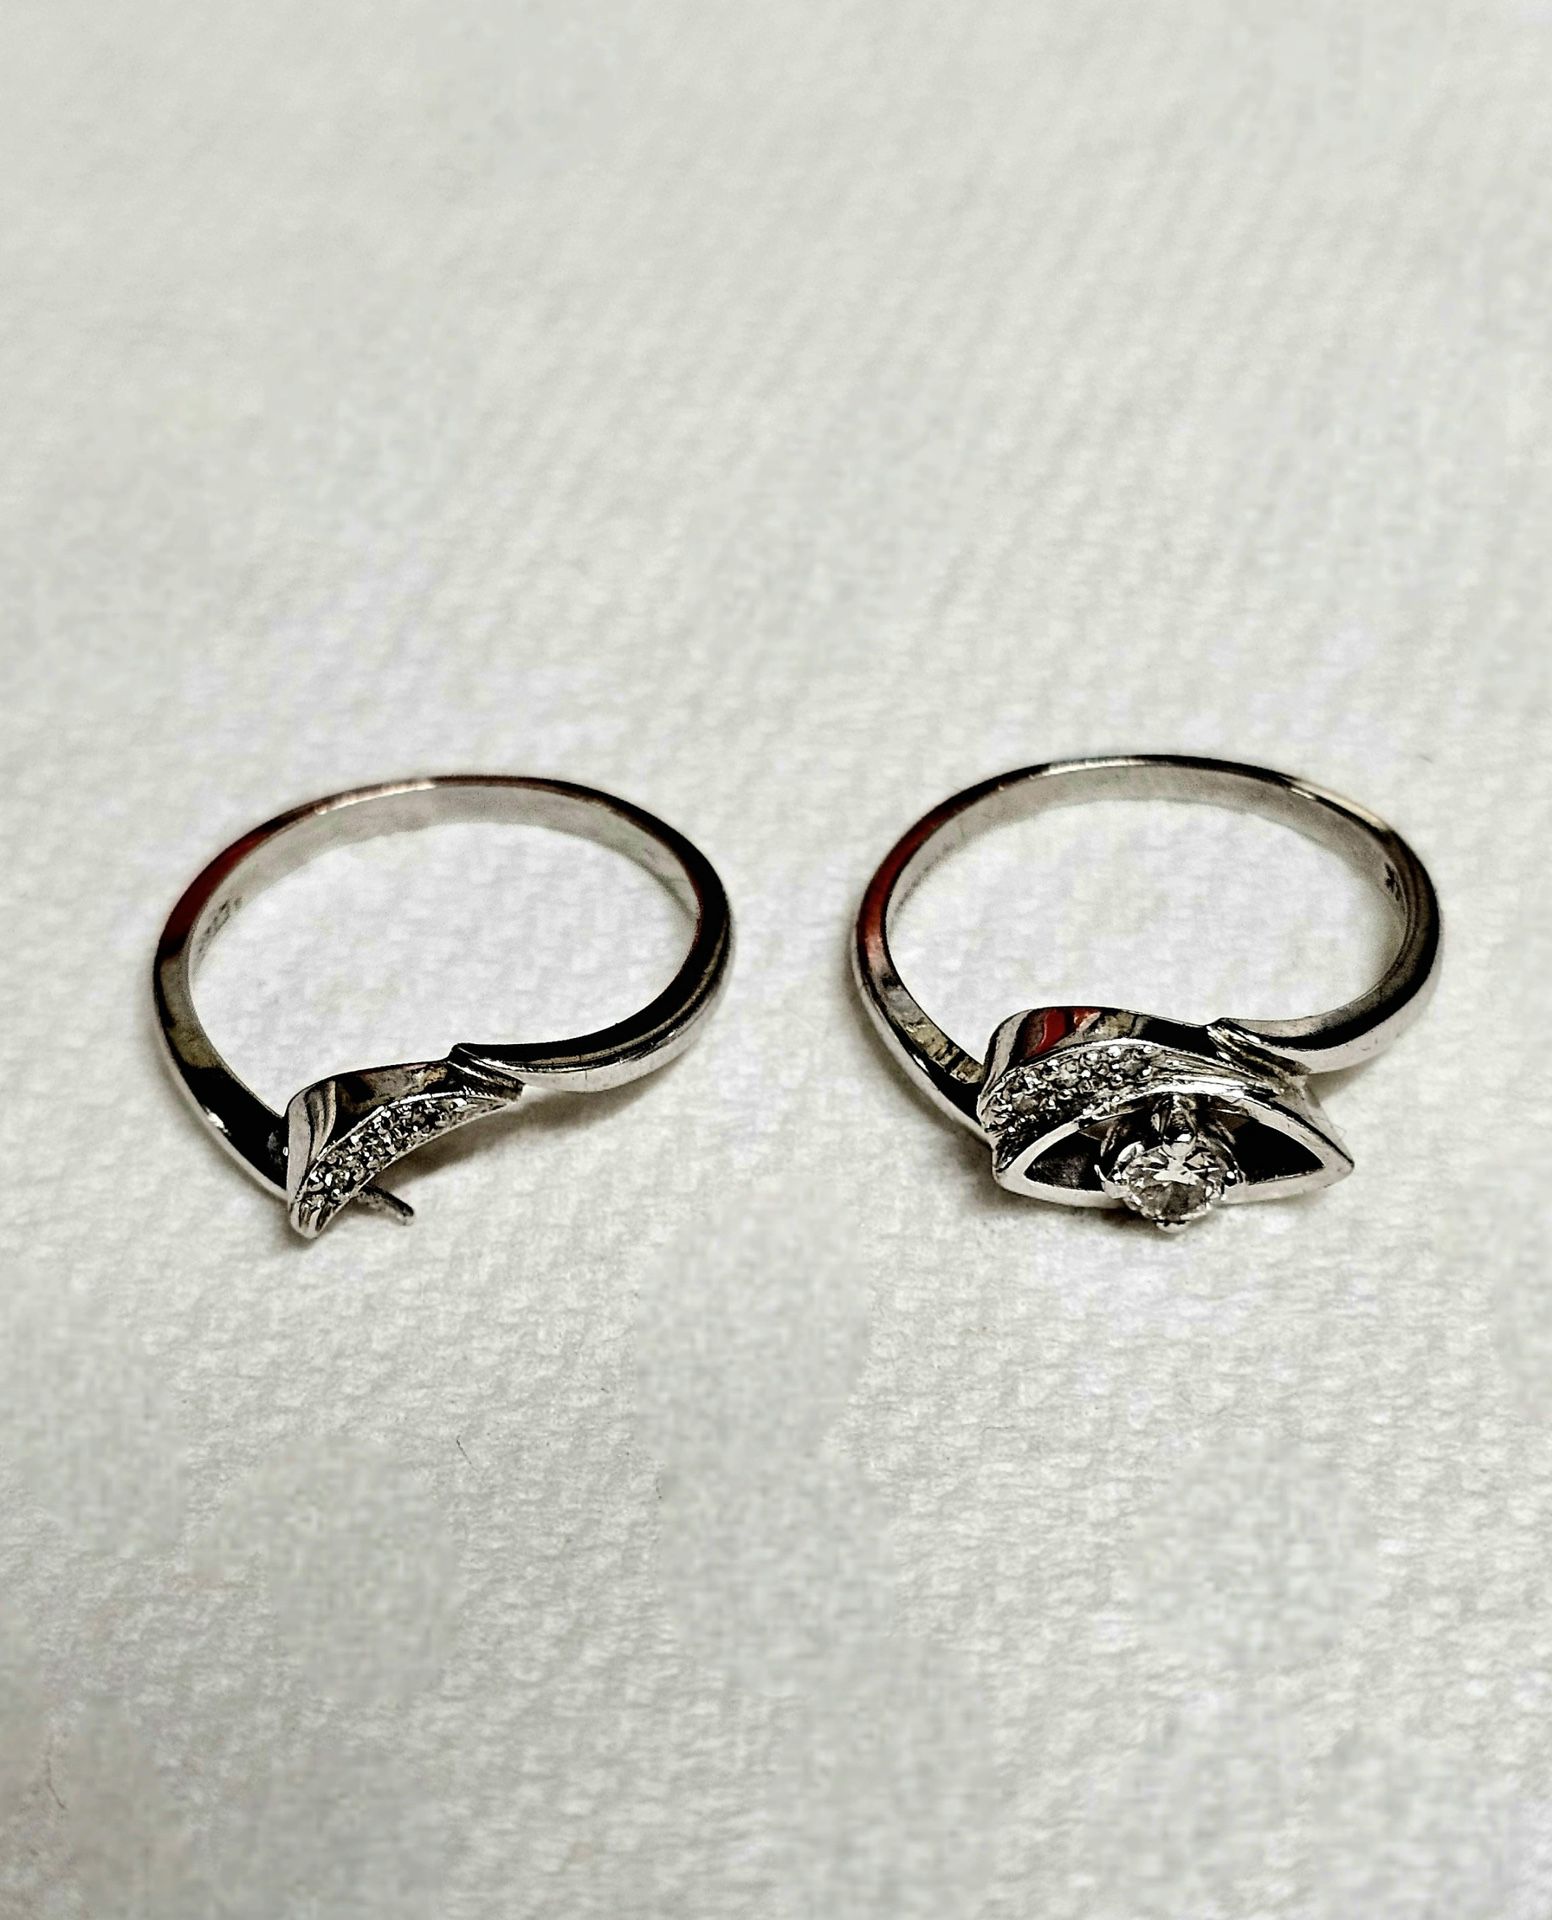  14k White Gold Eternal Love Diamond Wedding & Engagement Ring Set - Size 7